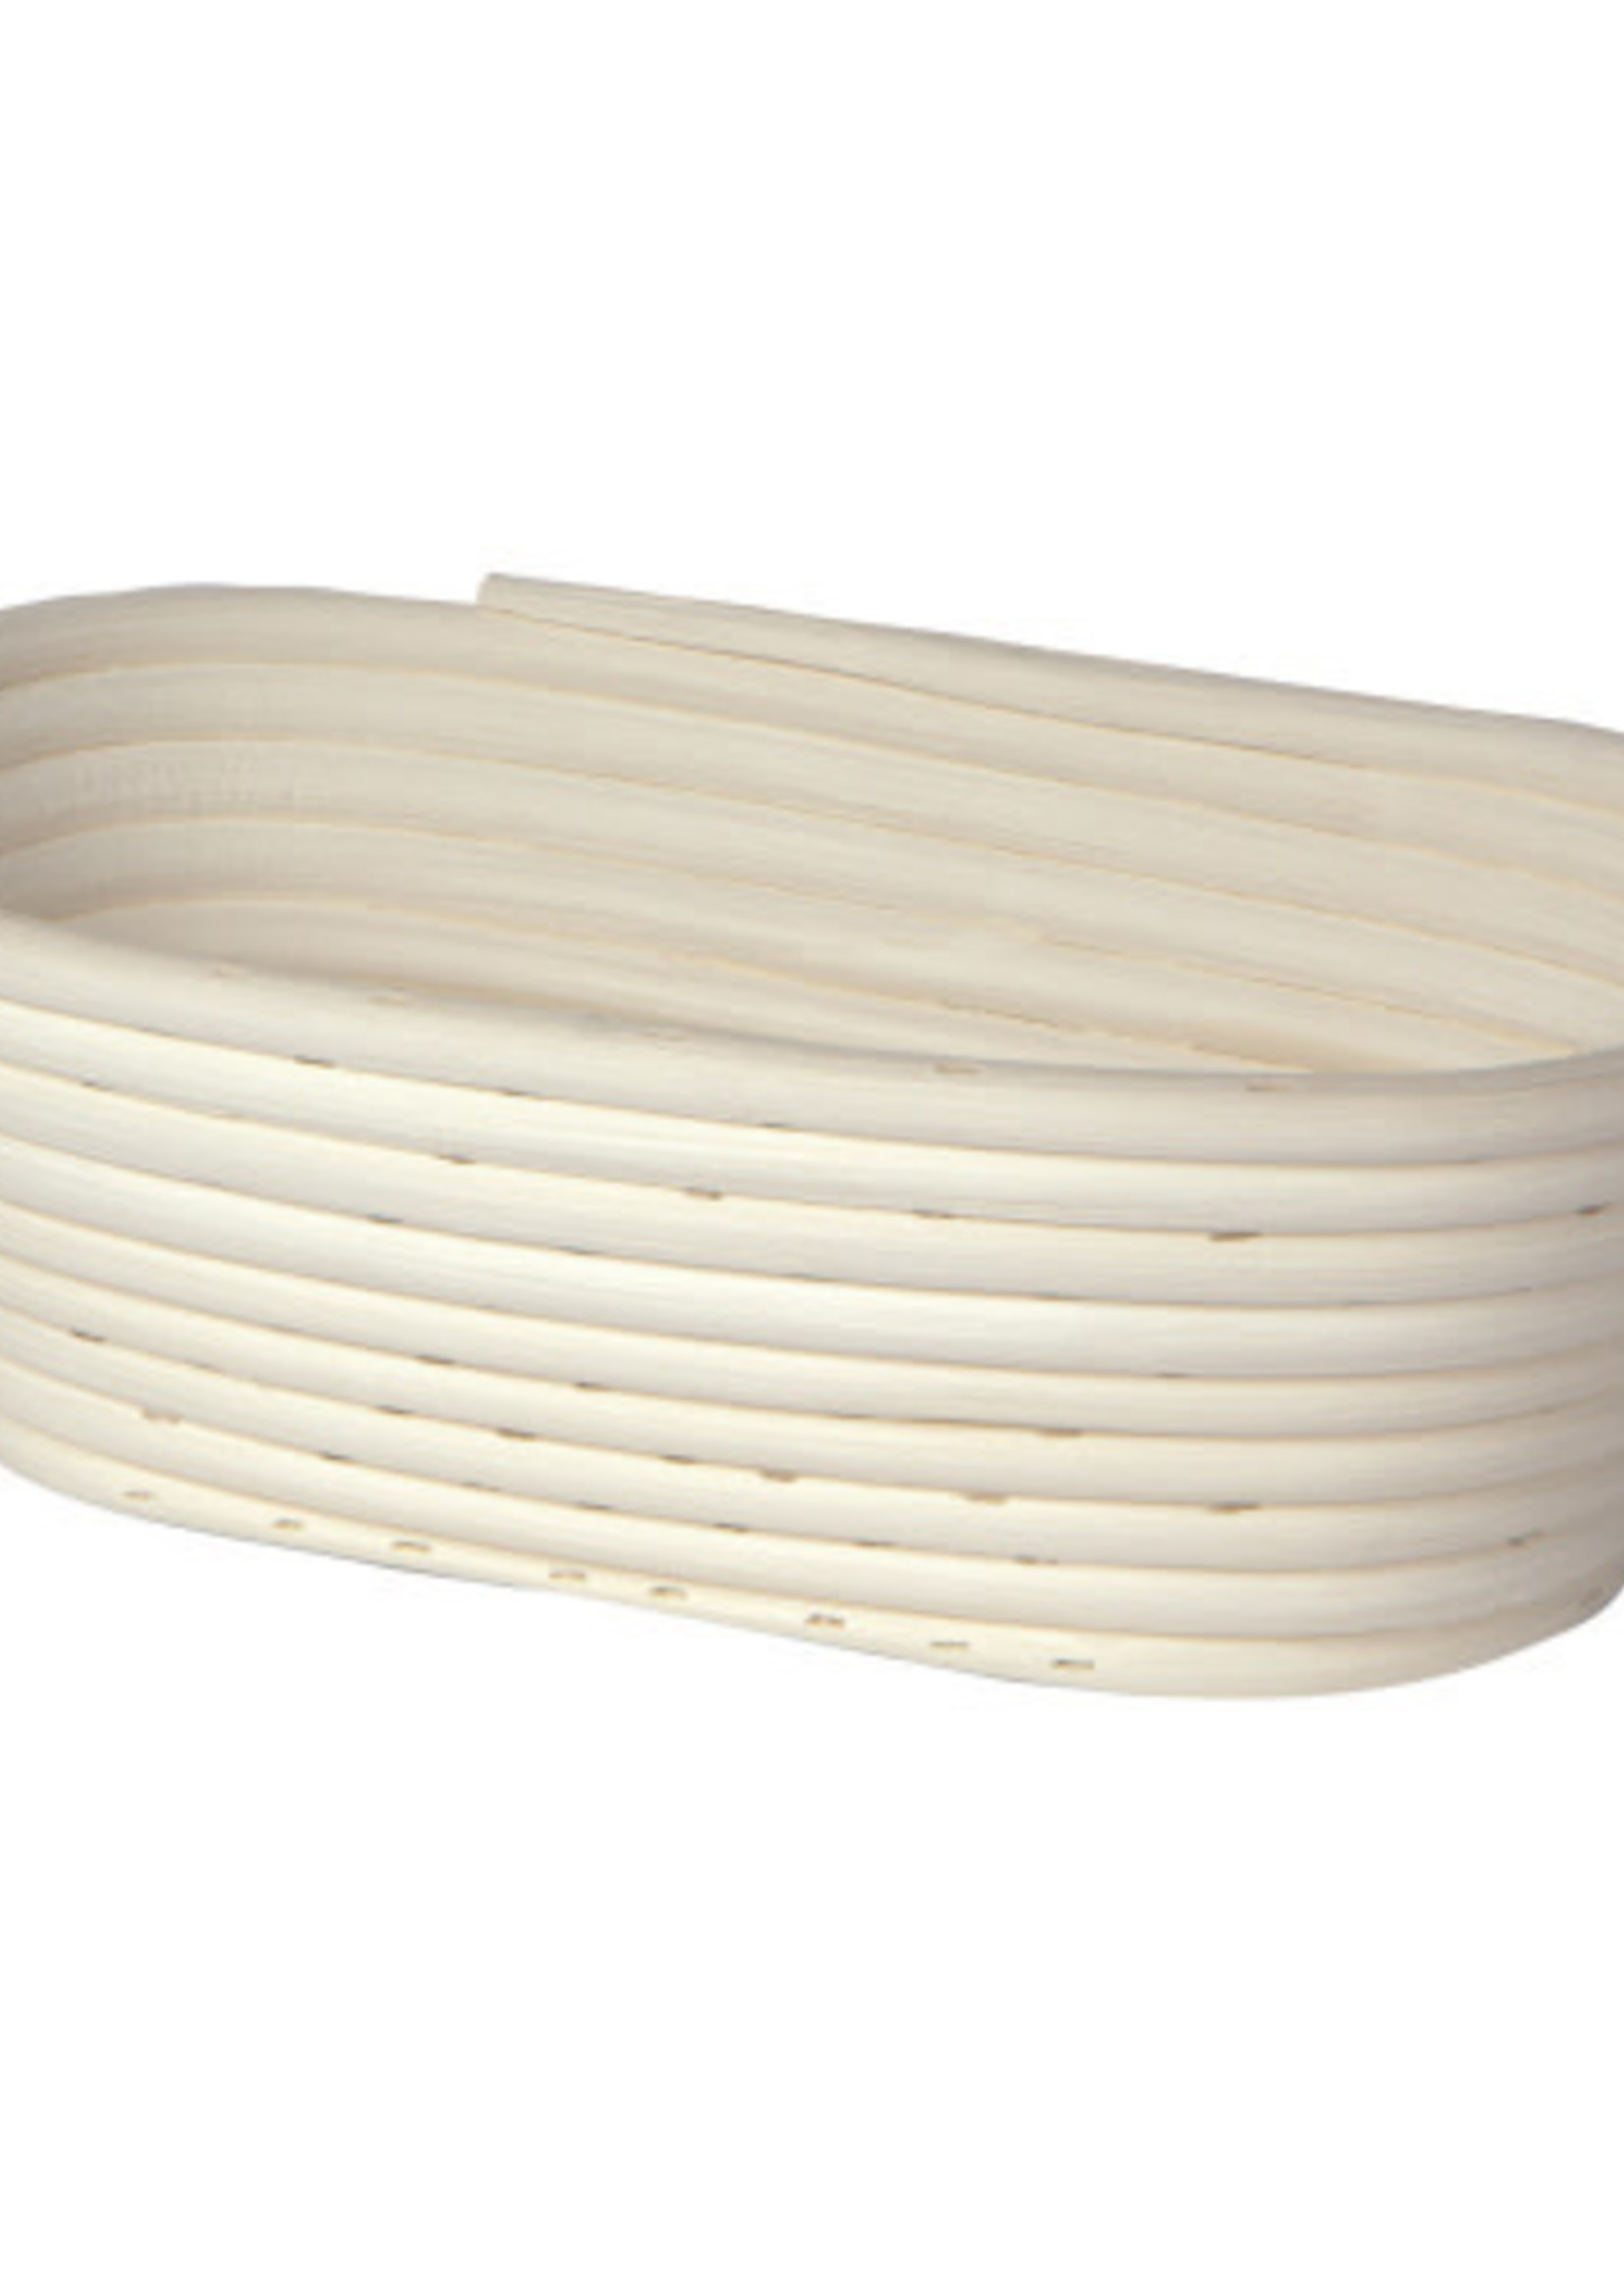 Banneton Basket 10 inch Oval w liner